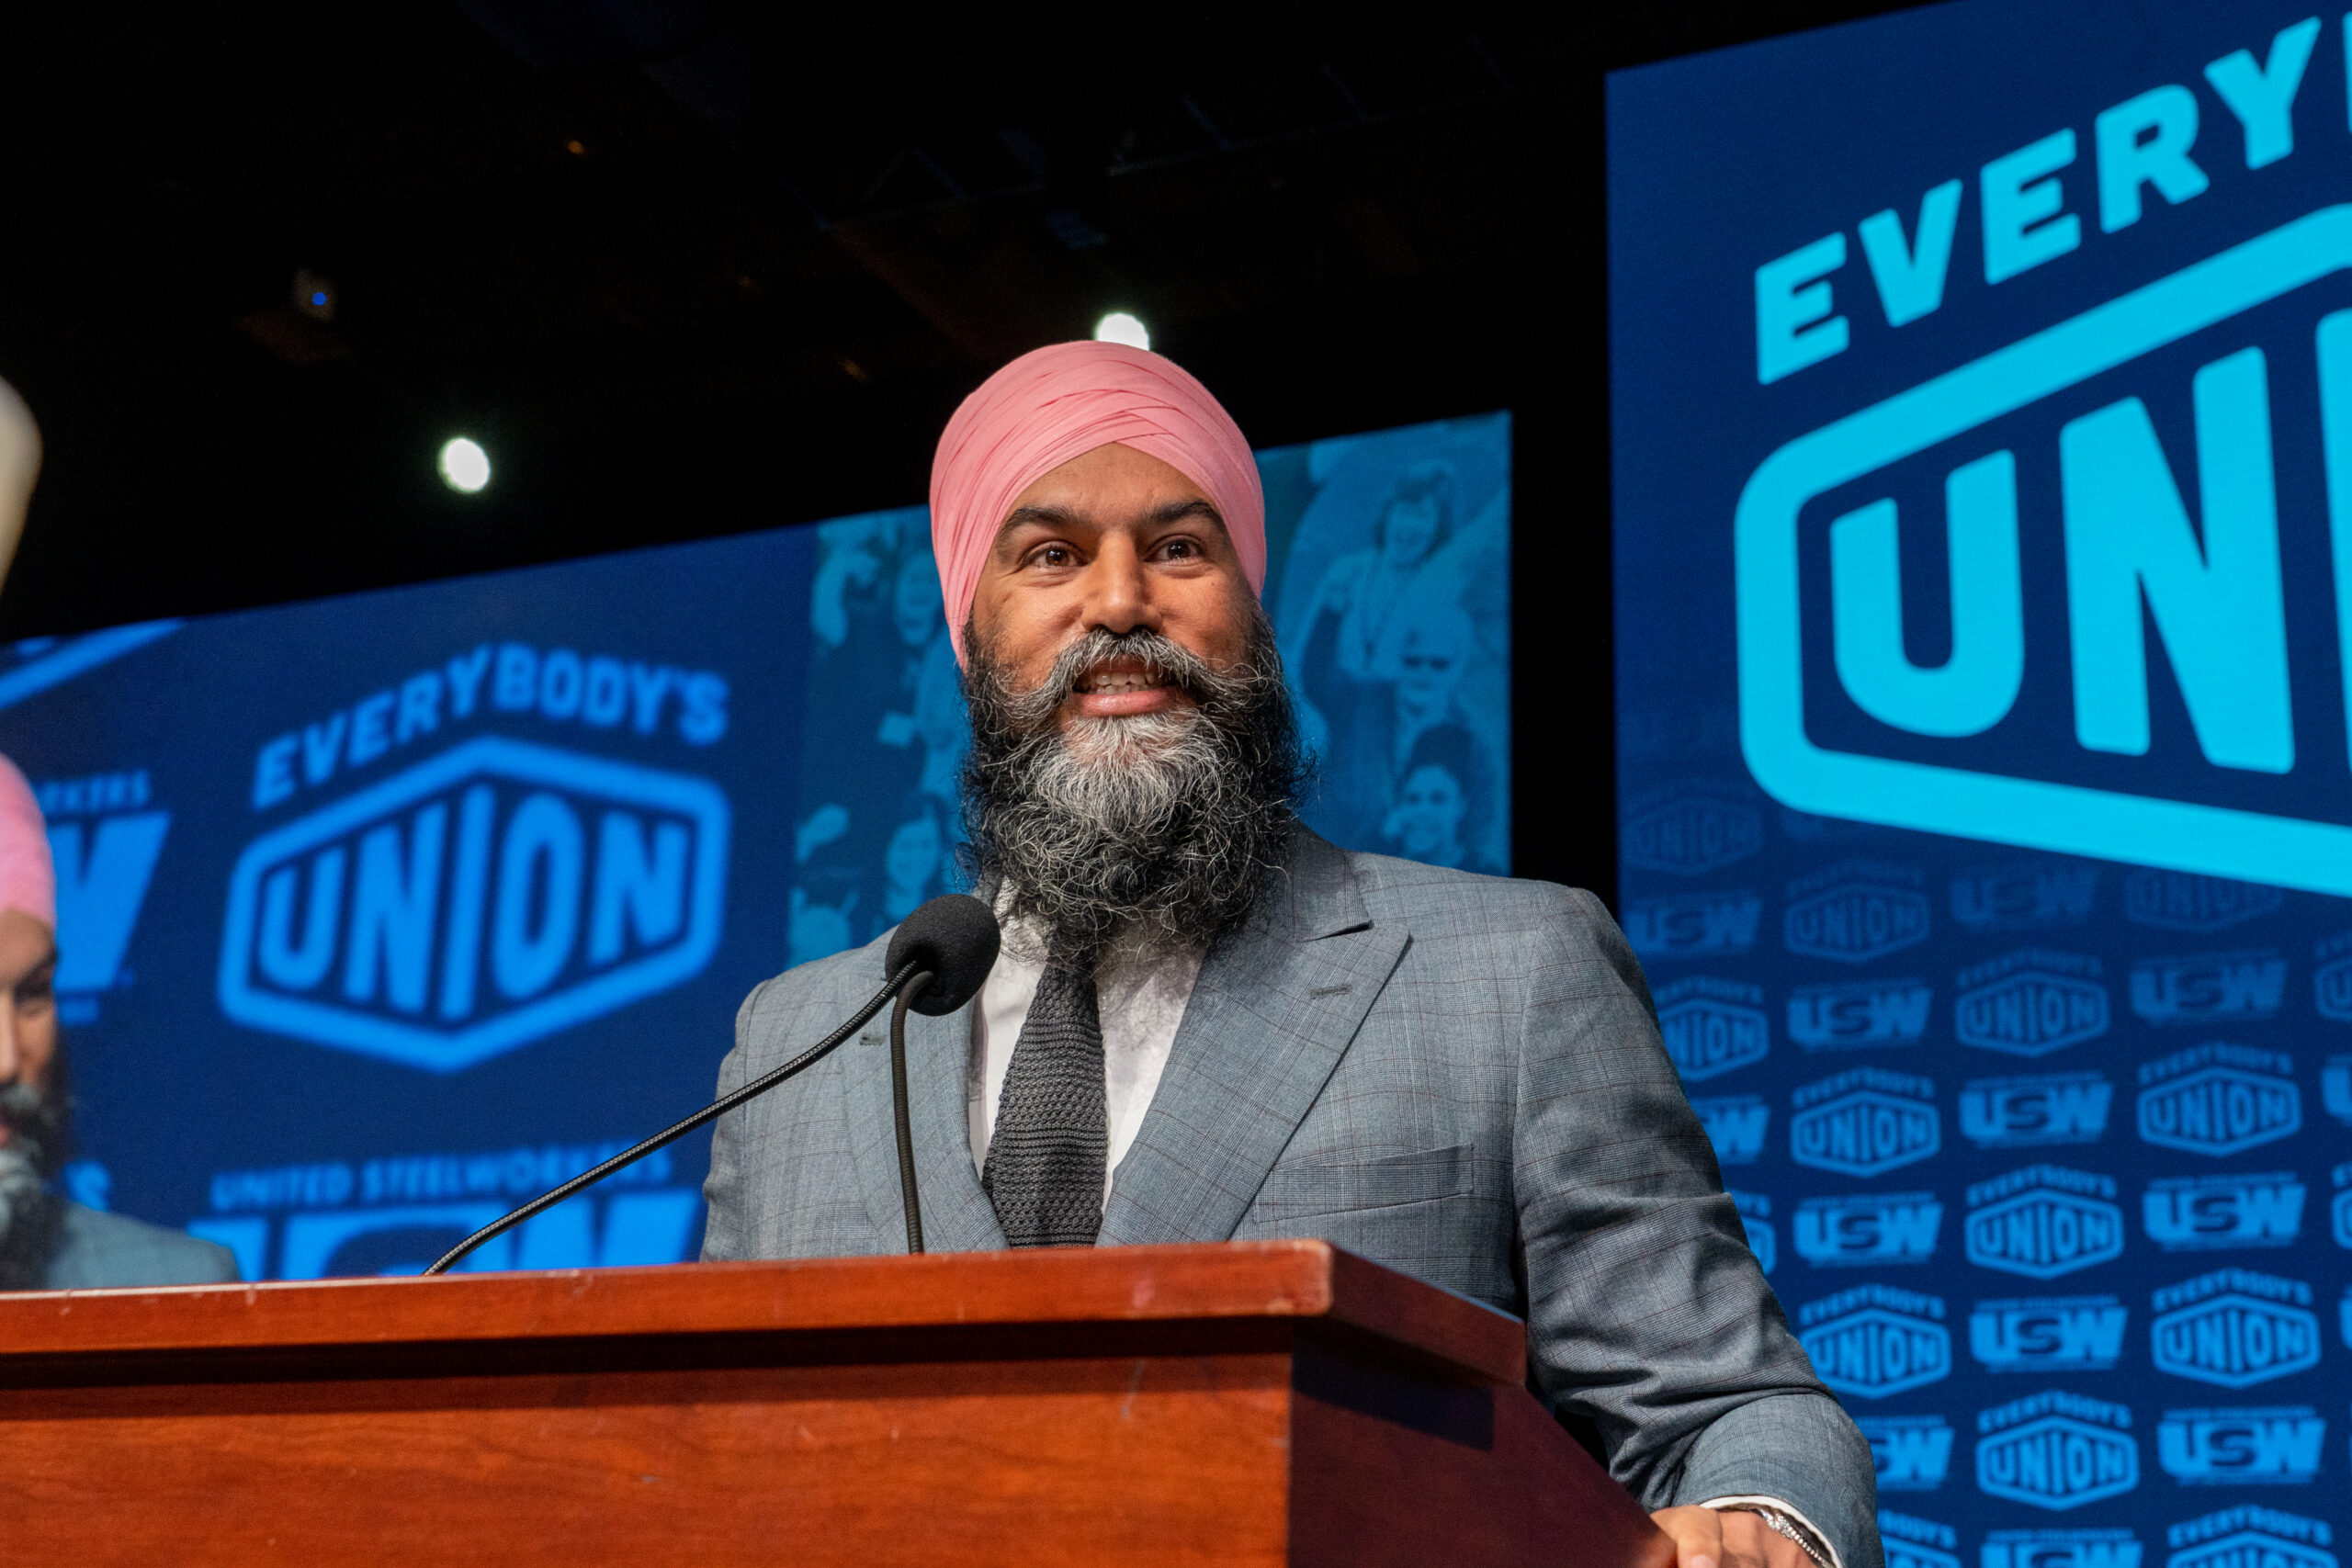 NDP Leader Jagmeet Singh speaking at the USW International Convention